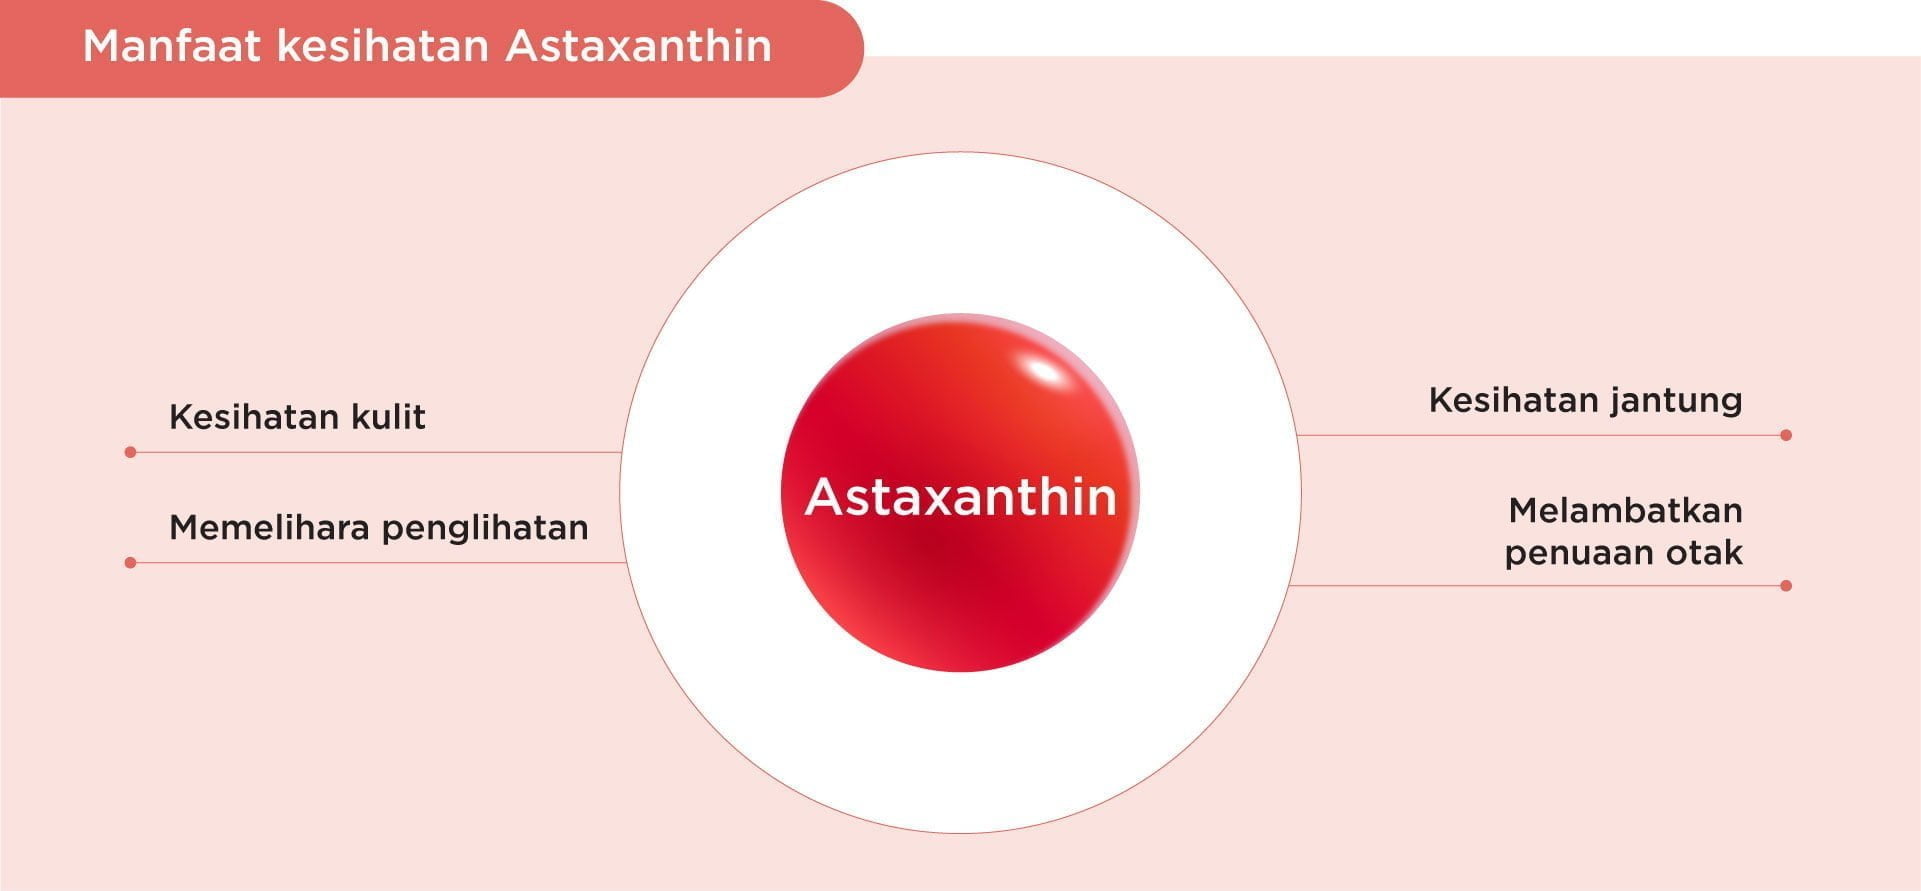 Benefits of Astaxanthin